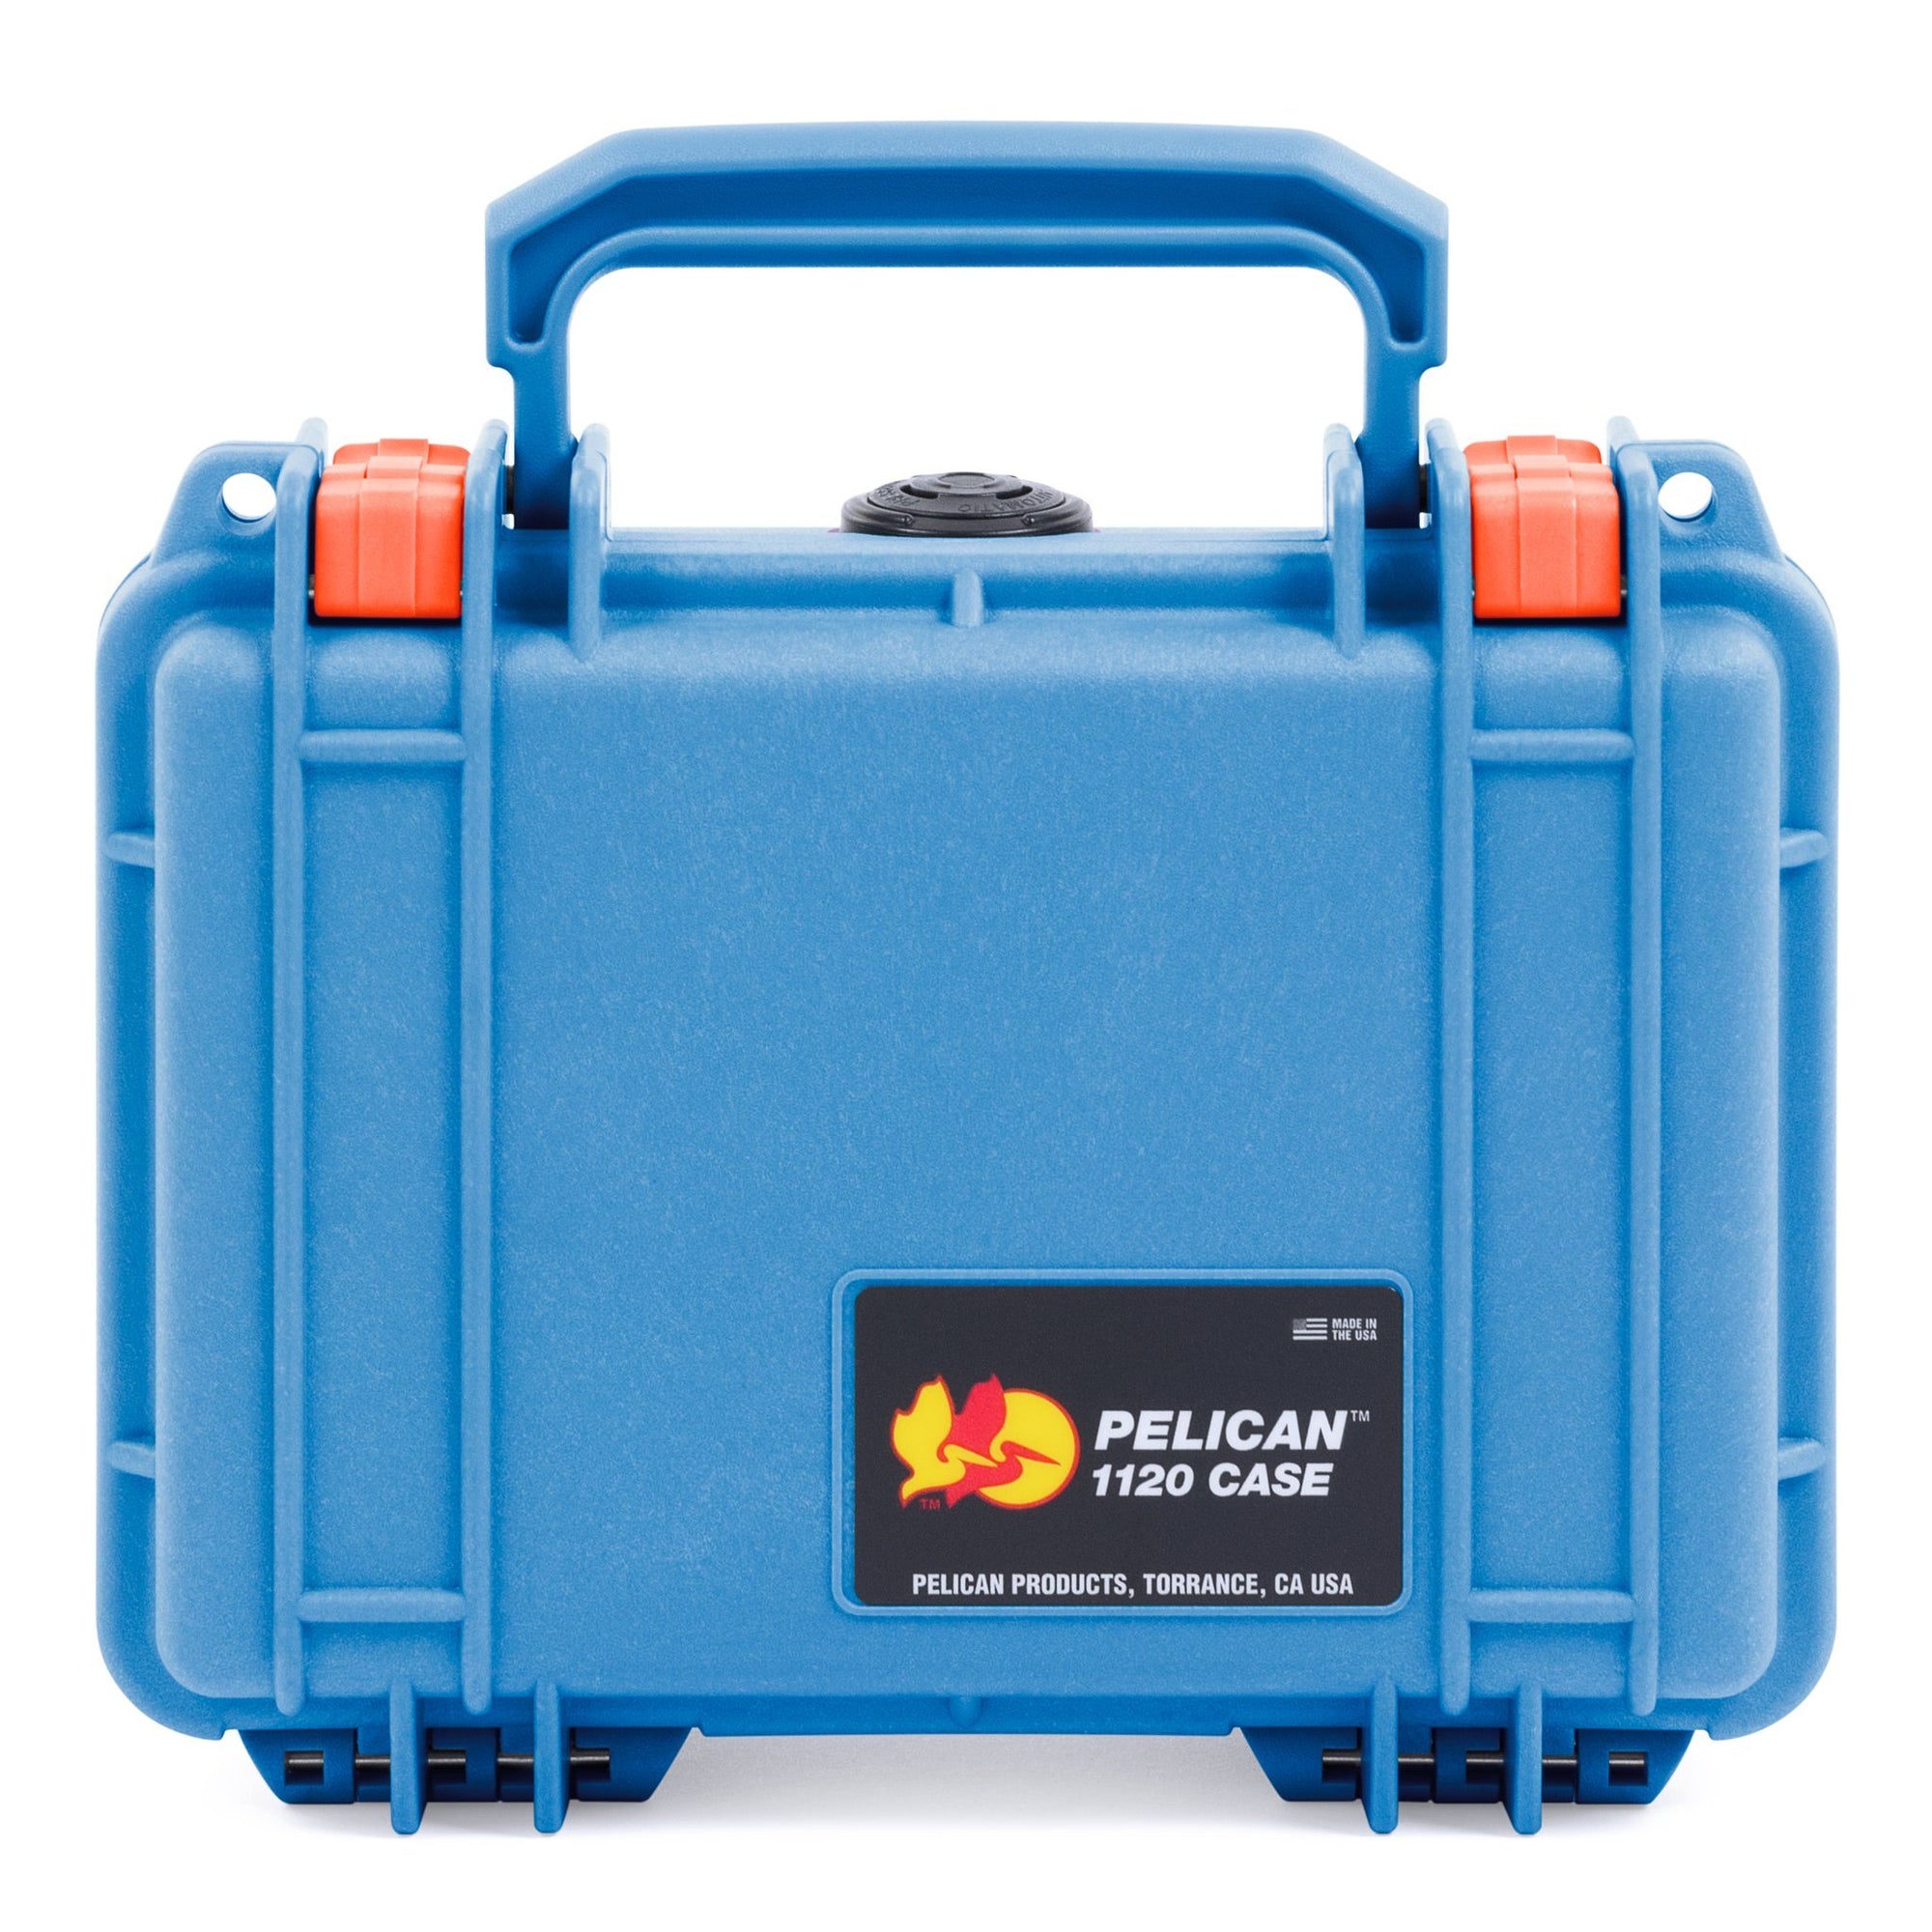 Pelican 1120 Case, Blue with Orange Latches ColorCase 